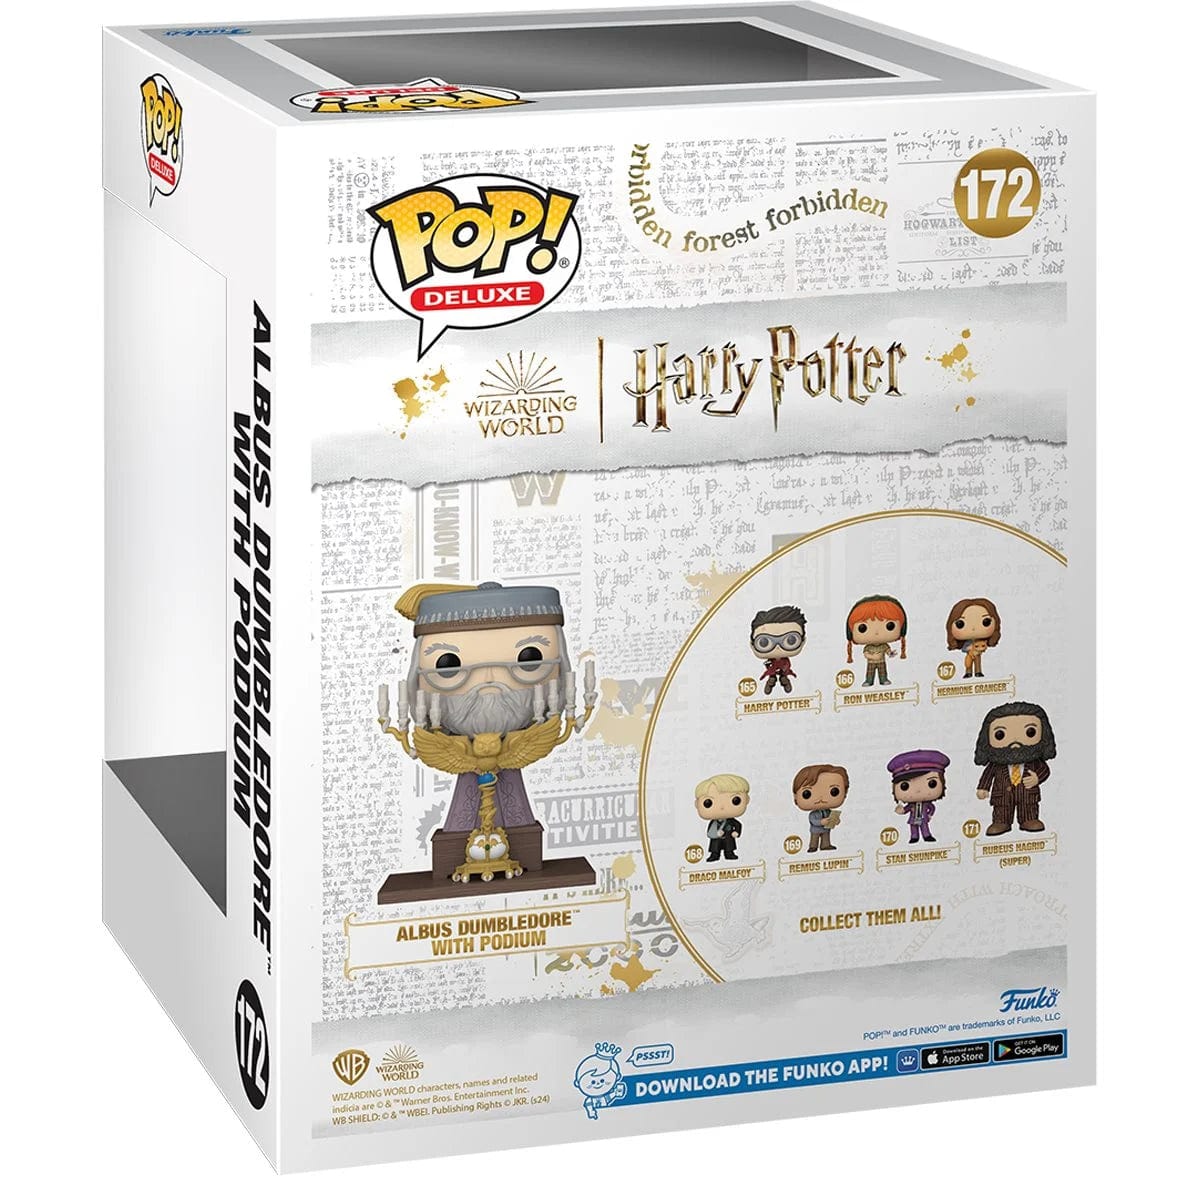 Funko Pop! Harry Potter and the Prisoner of Azkaban Albus Dumbledore with Podium Deluxe Vinyl Figure #172